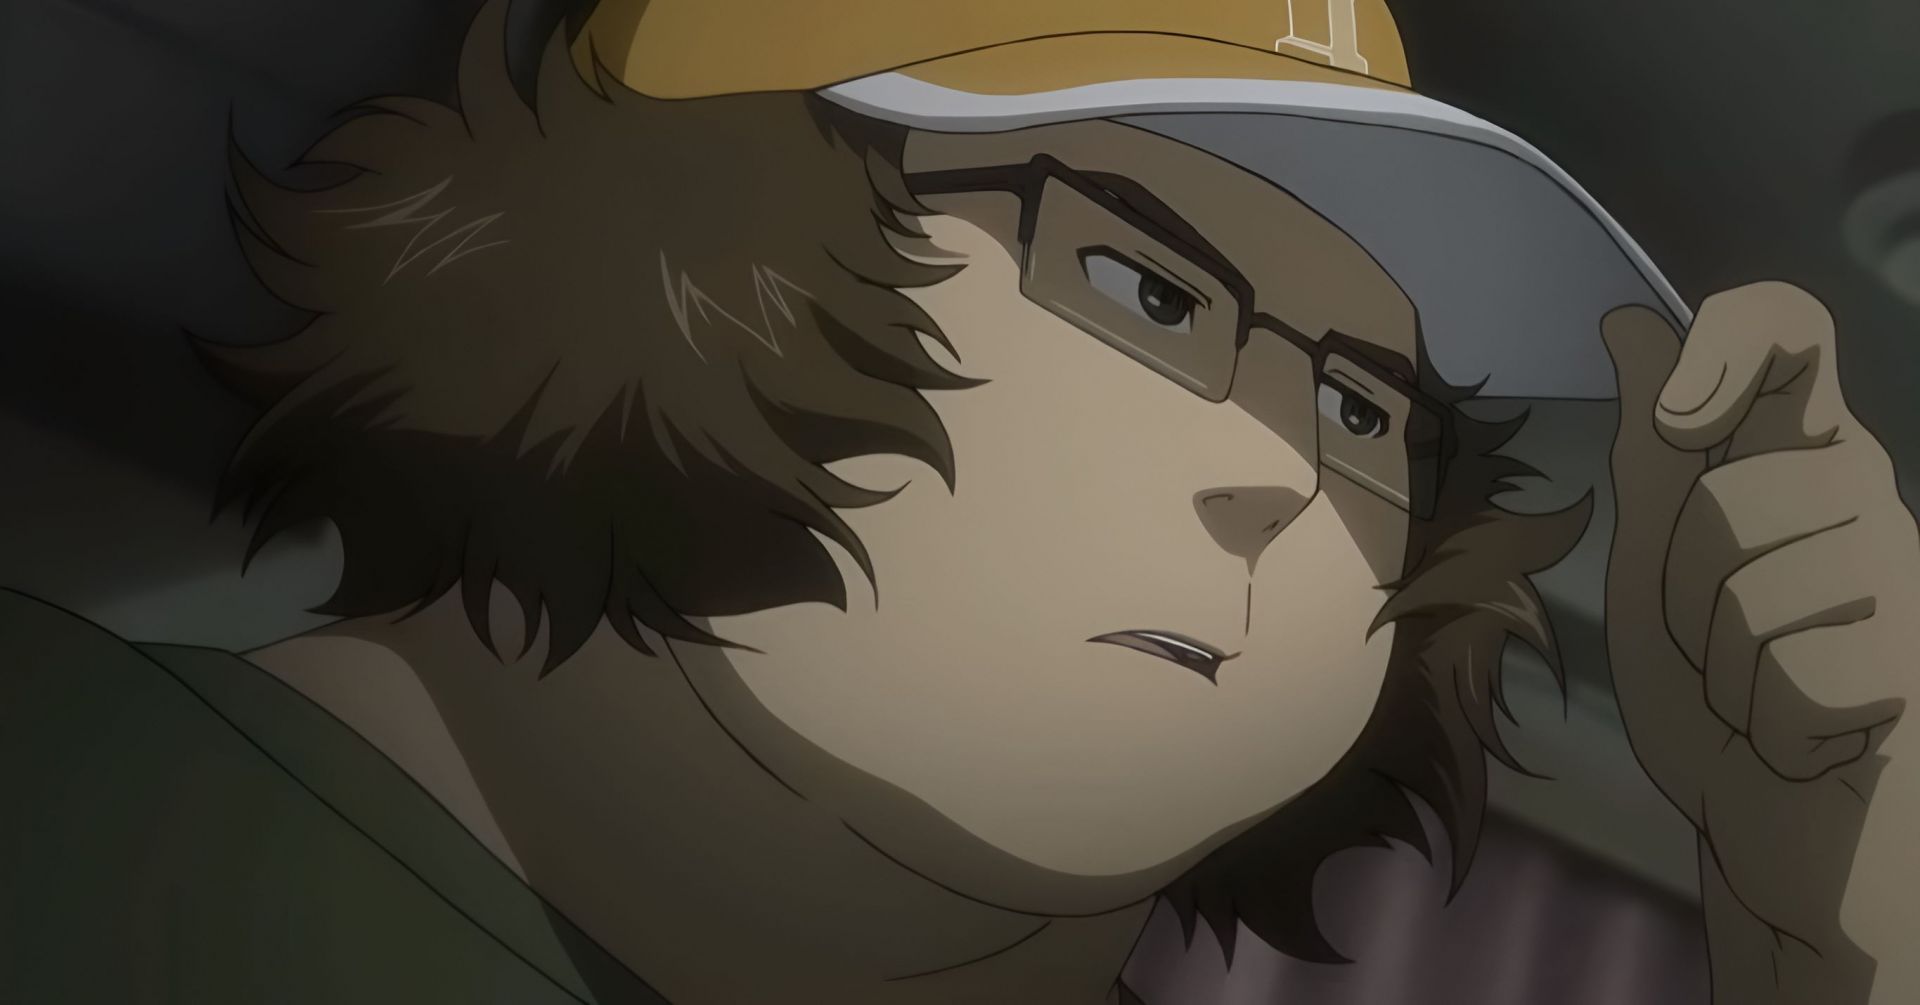 Itaru Hashida as seen in the Steins;Gate anime series (Studio White Fox)